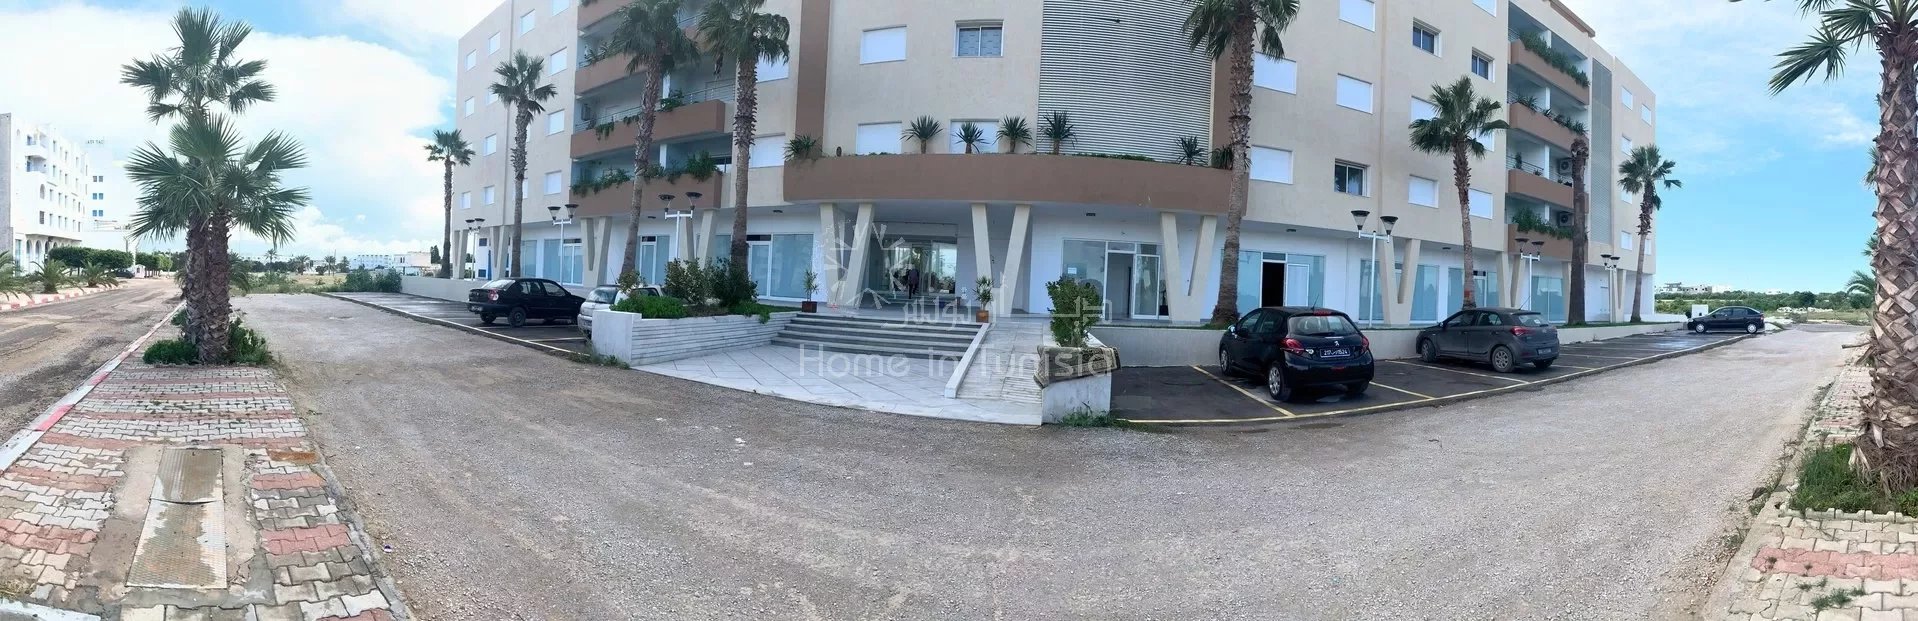 Luxury apartments near the beach